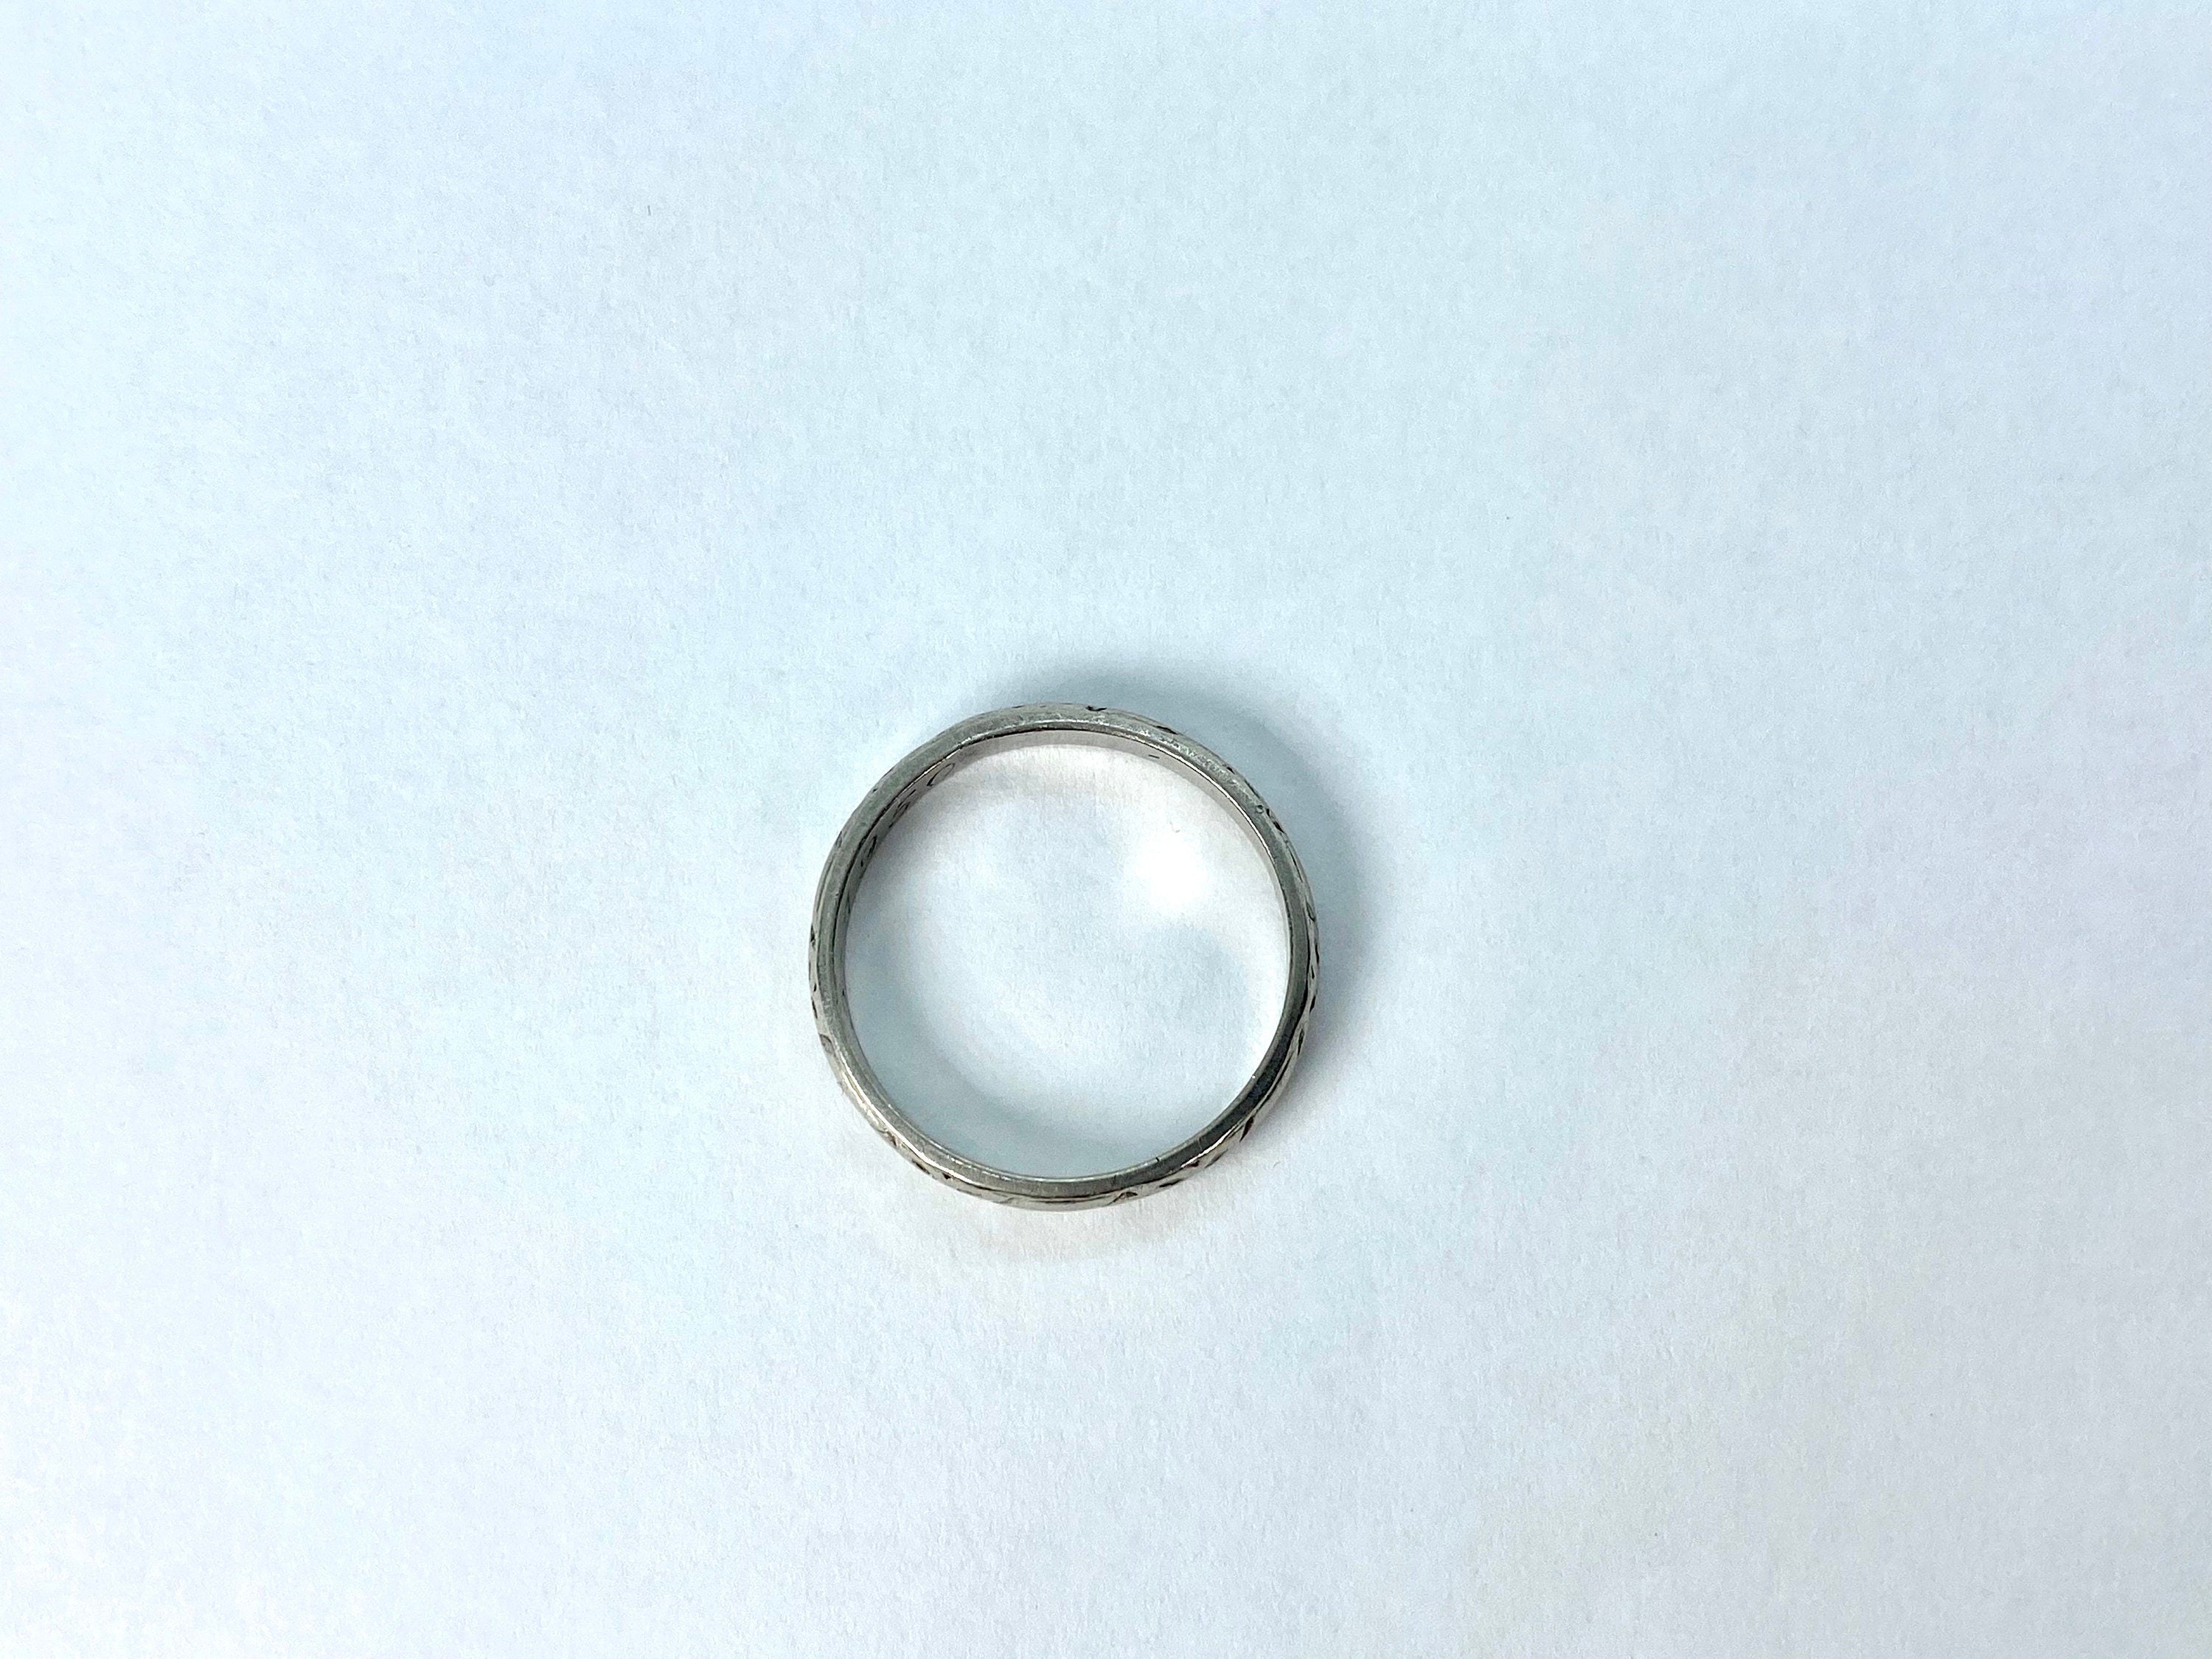 Mid Century Platinum Wedding Ring, Paul 5-3-1950, Size 6.75